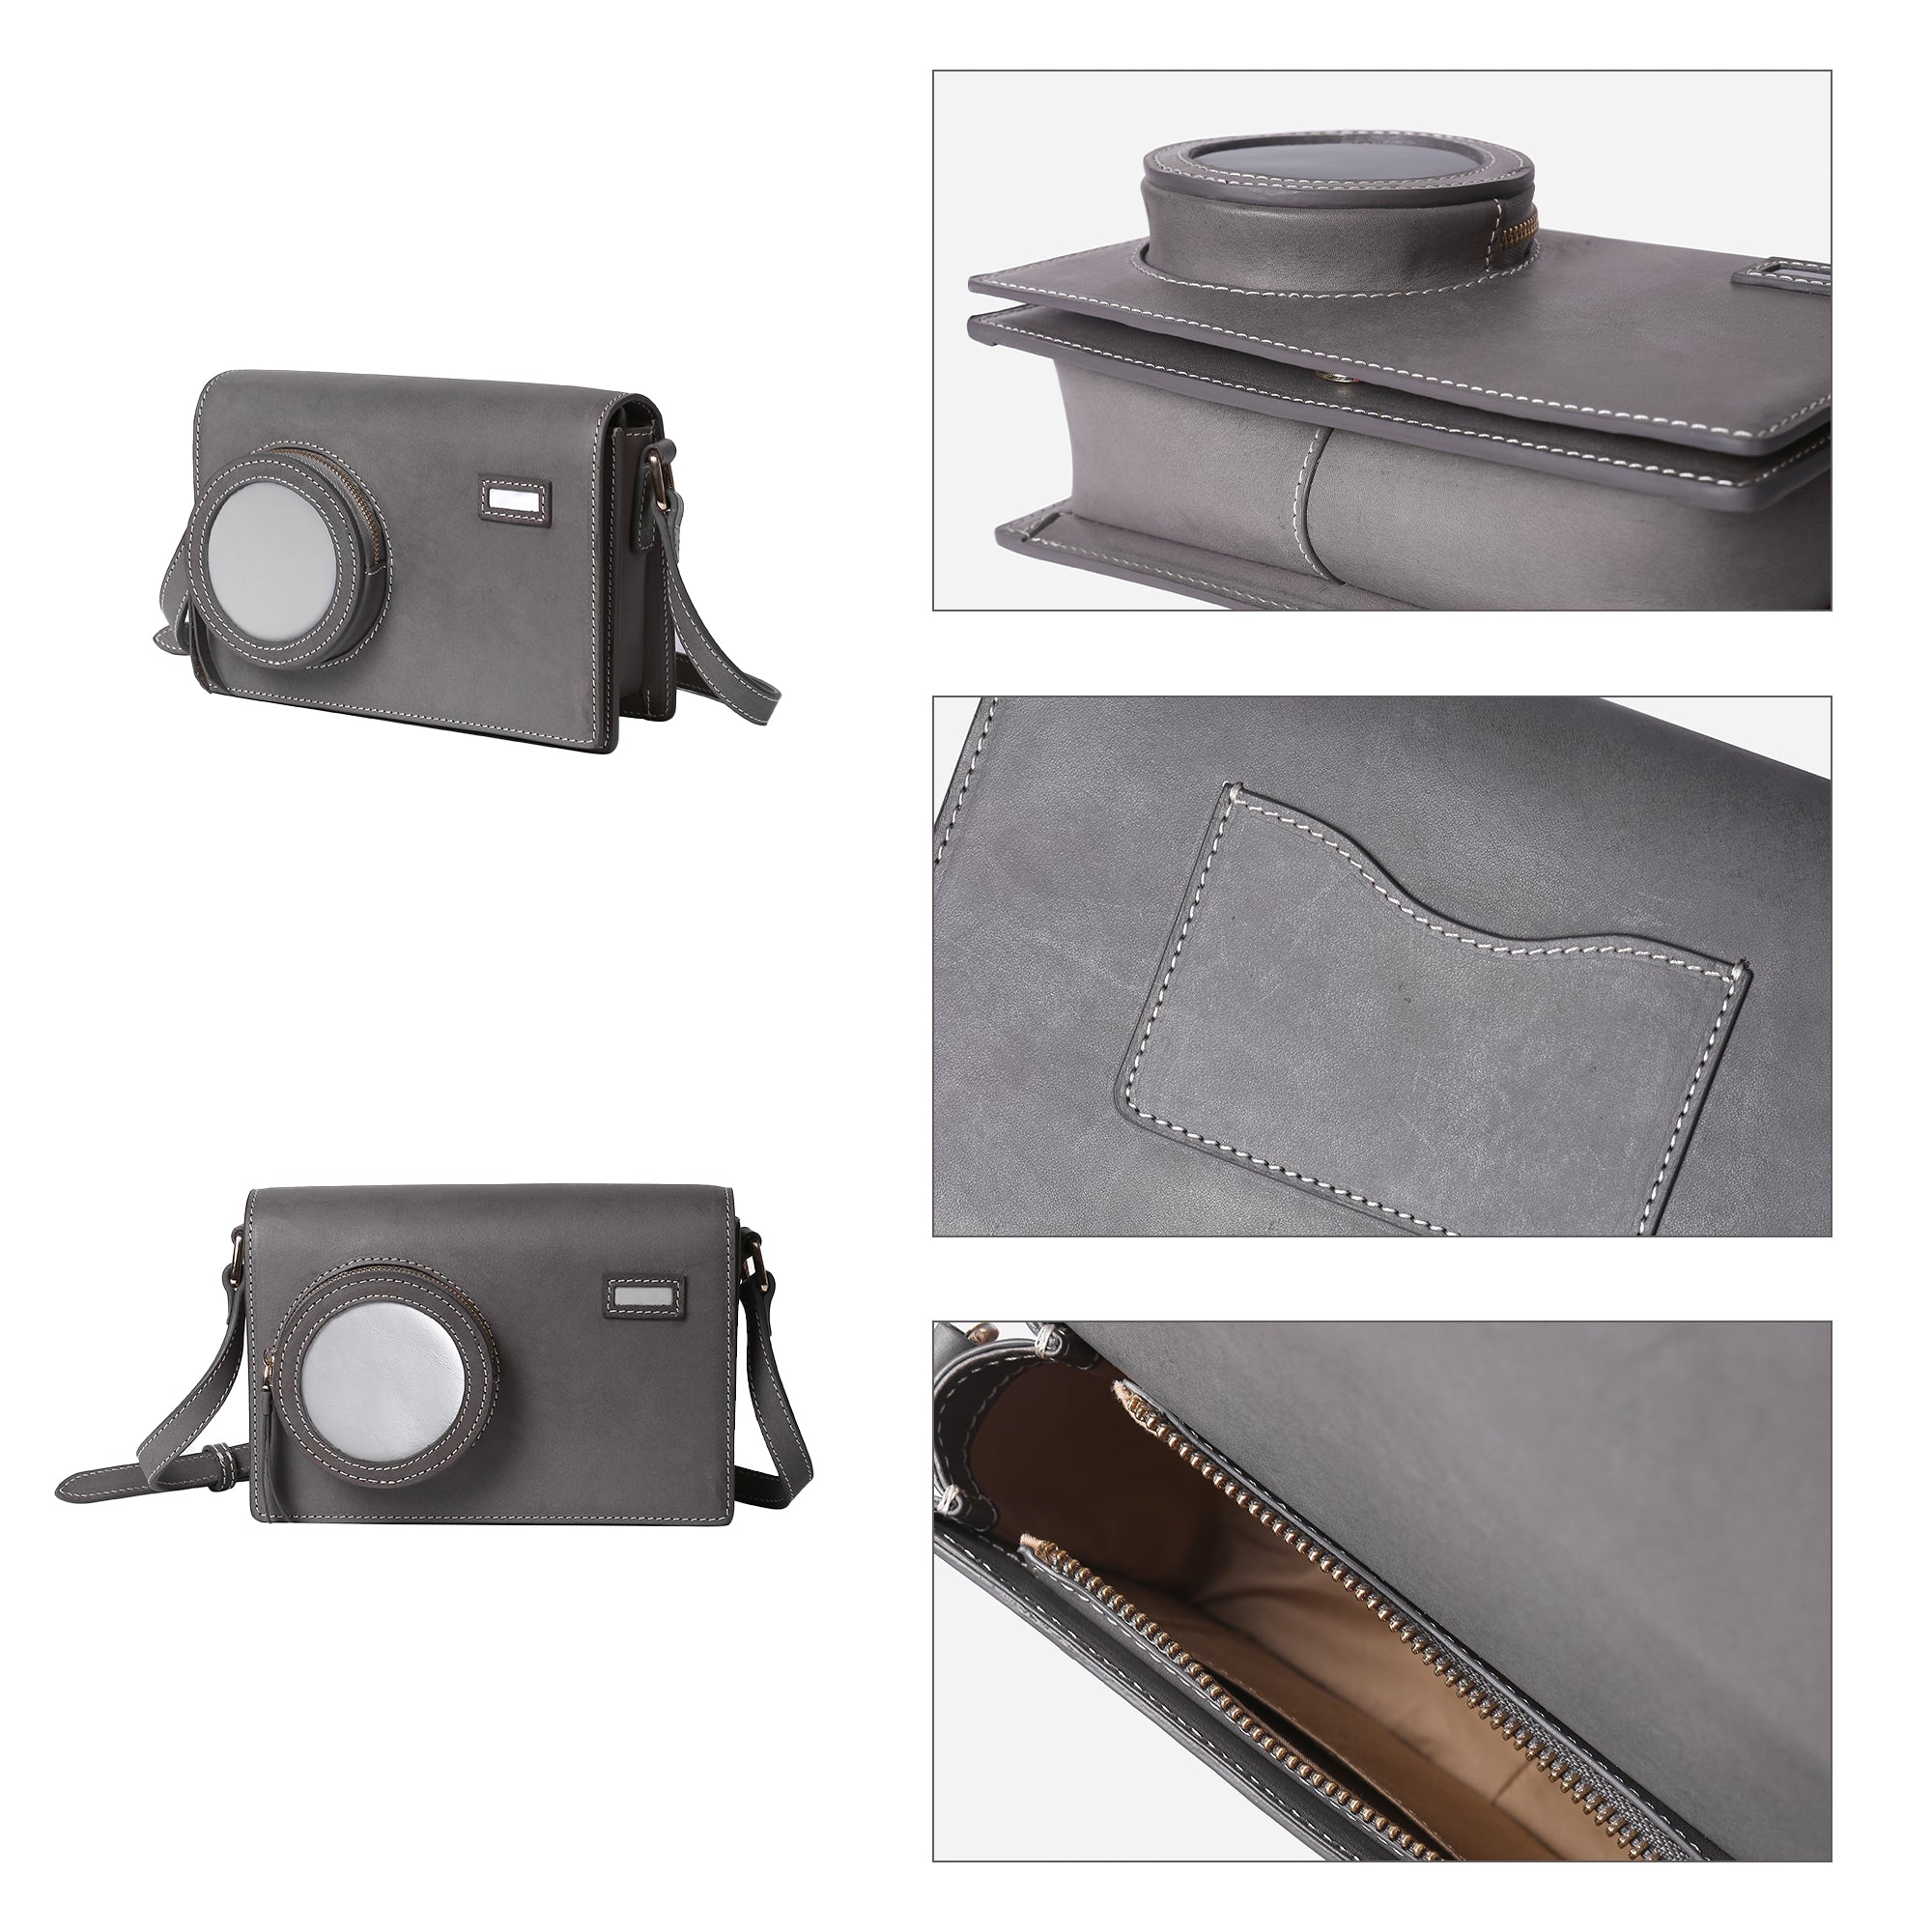 DIY Bag Kits - Original Design Niche Camera Crossbody One-shoulder Handbag